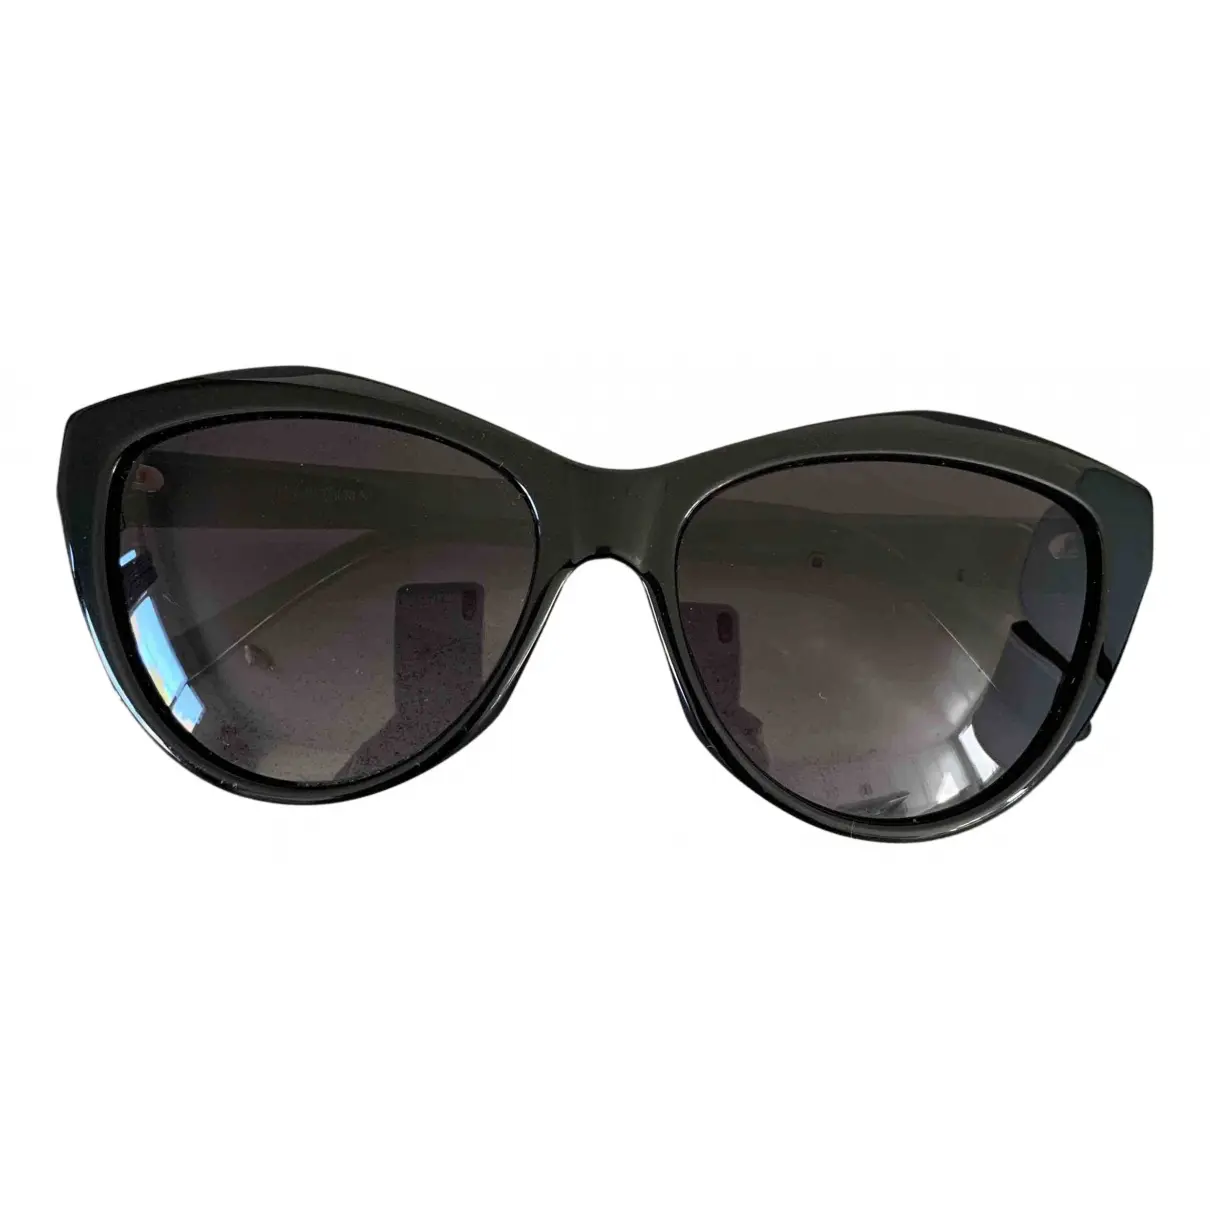 Sunglasses Yves Saint Laurent